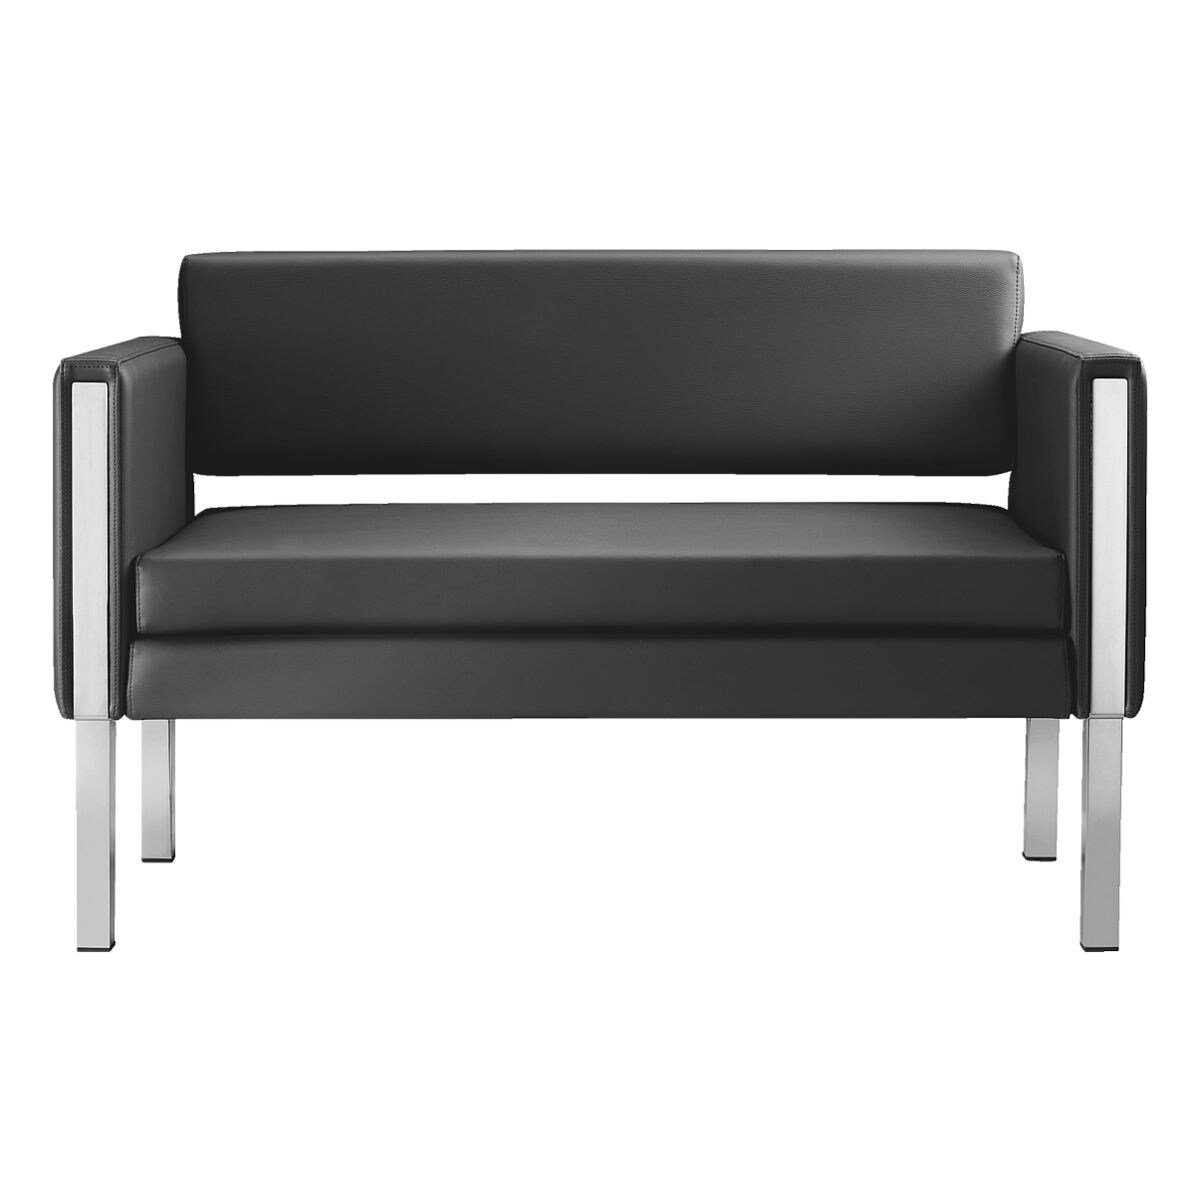 Bisley Sessel Only, 2-Sitzer, gepolstert, Kunstleder, Metallfüße, Sitzhöhe 45 cm